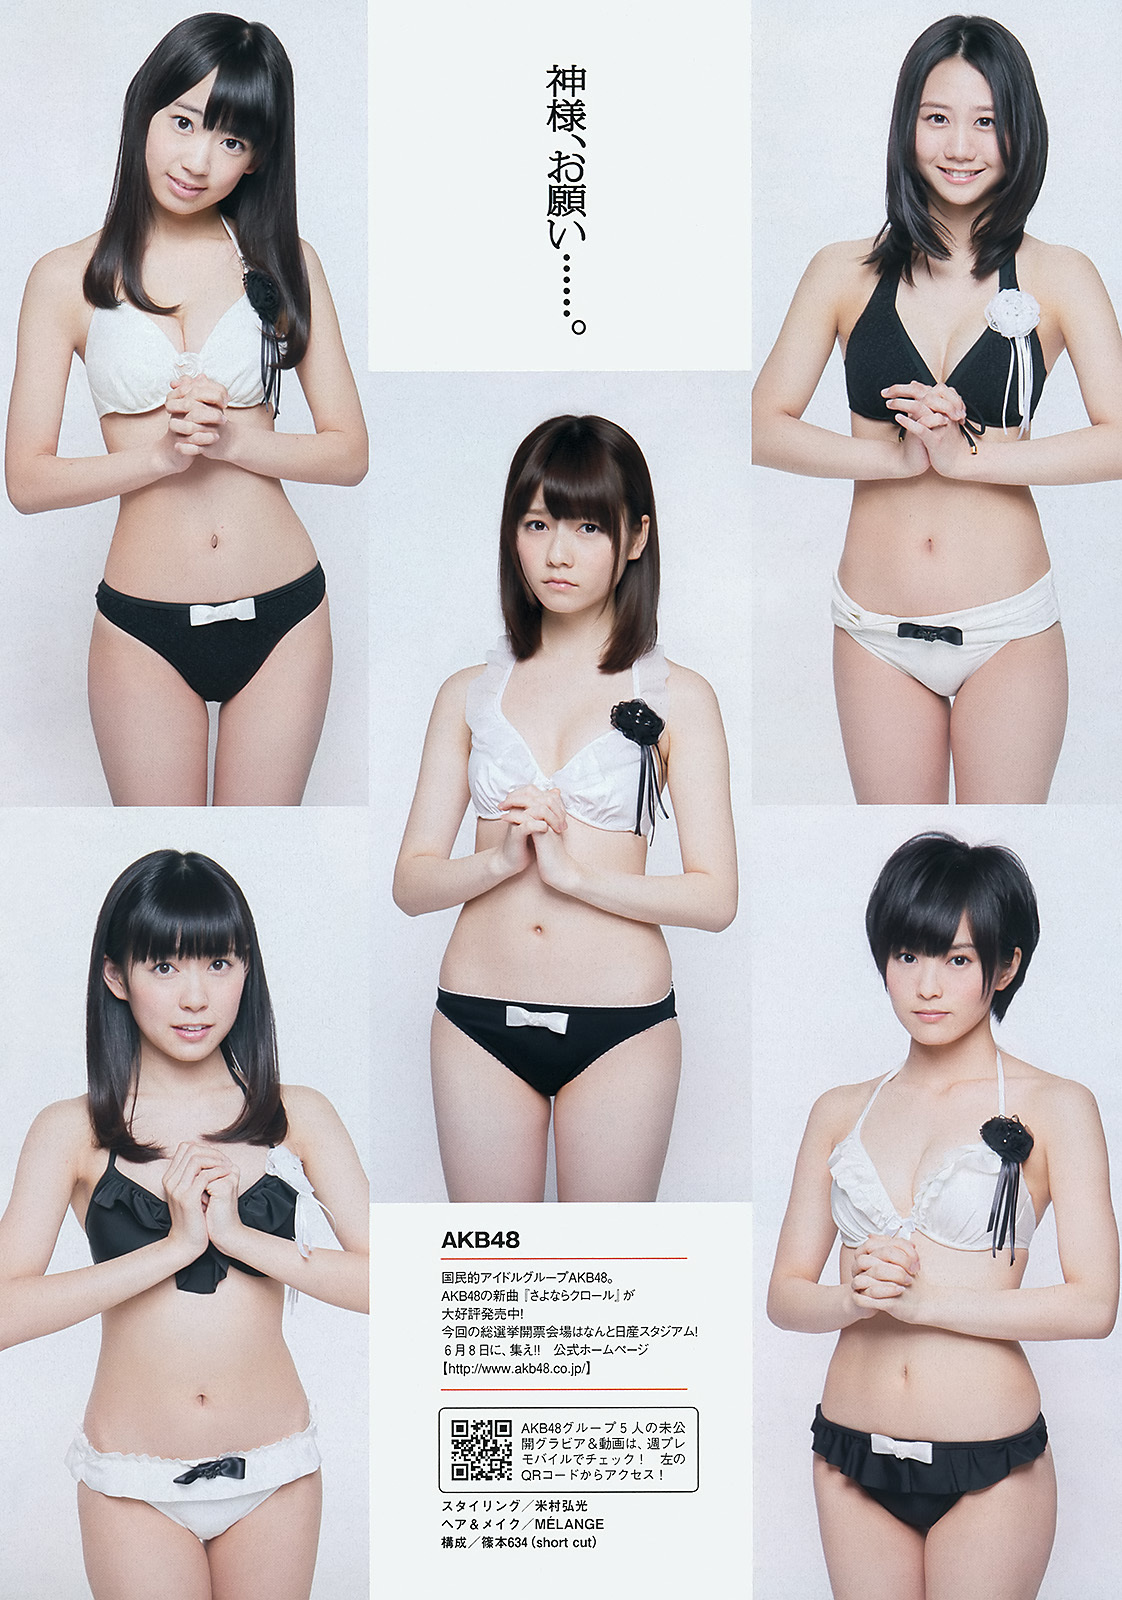 [weekly Playboy] No.24 Asaka Shimazaki Asahi saki